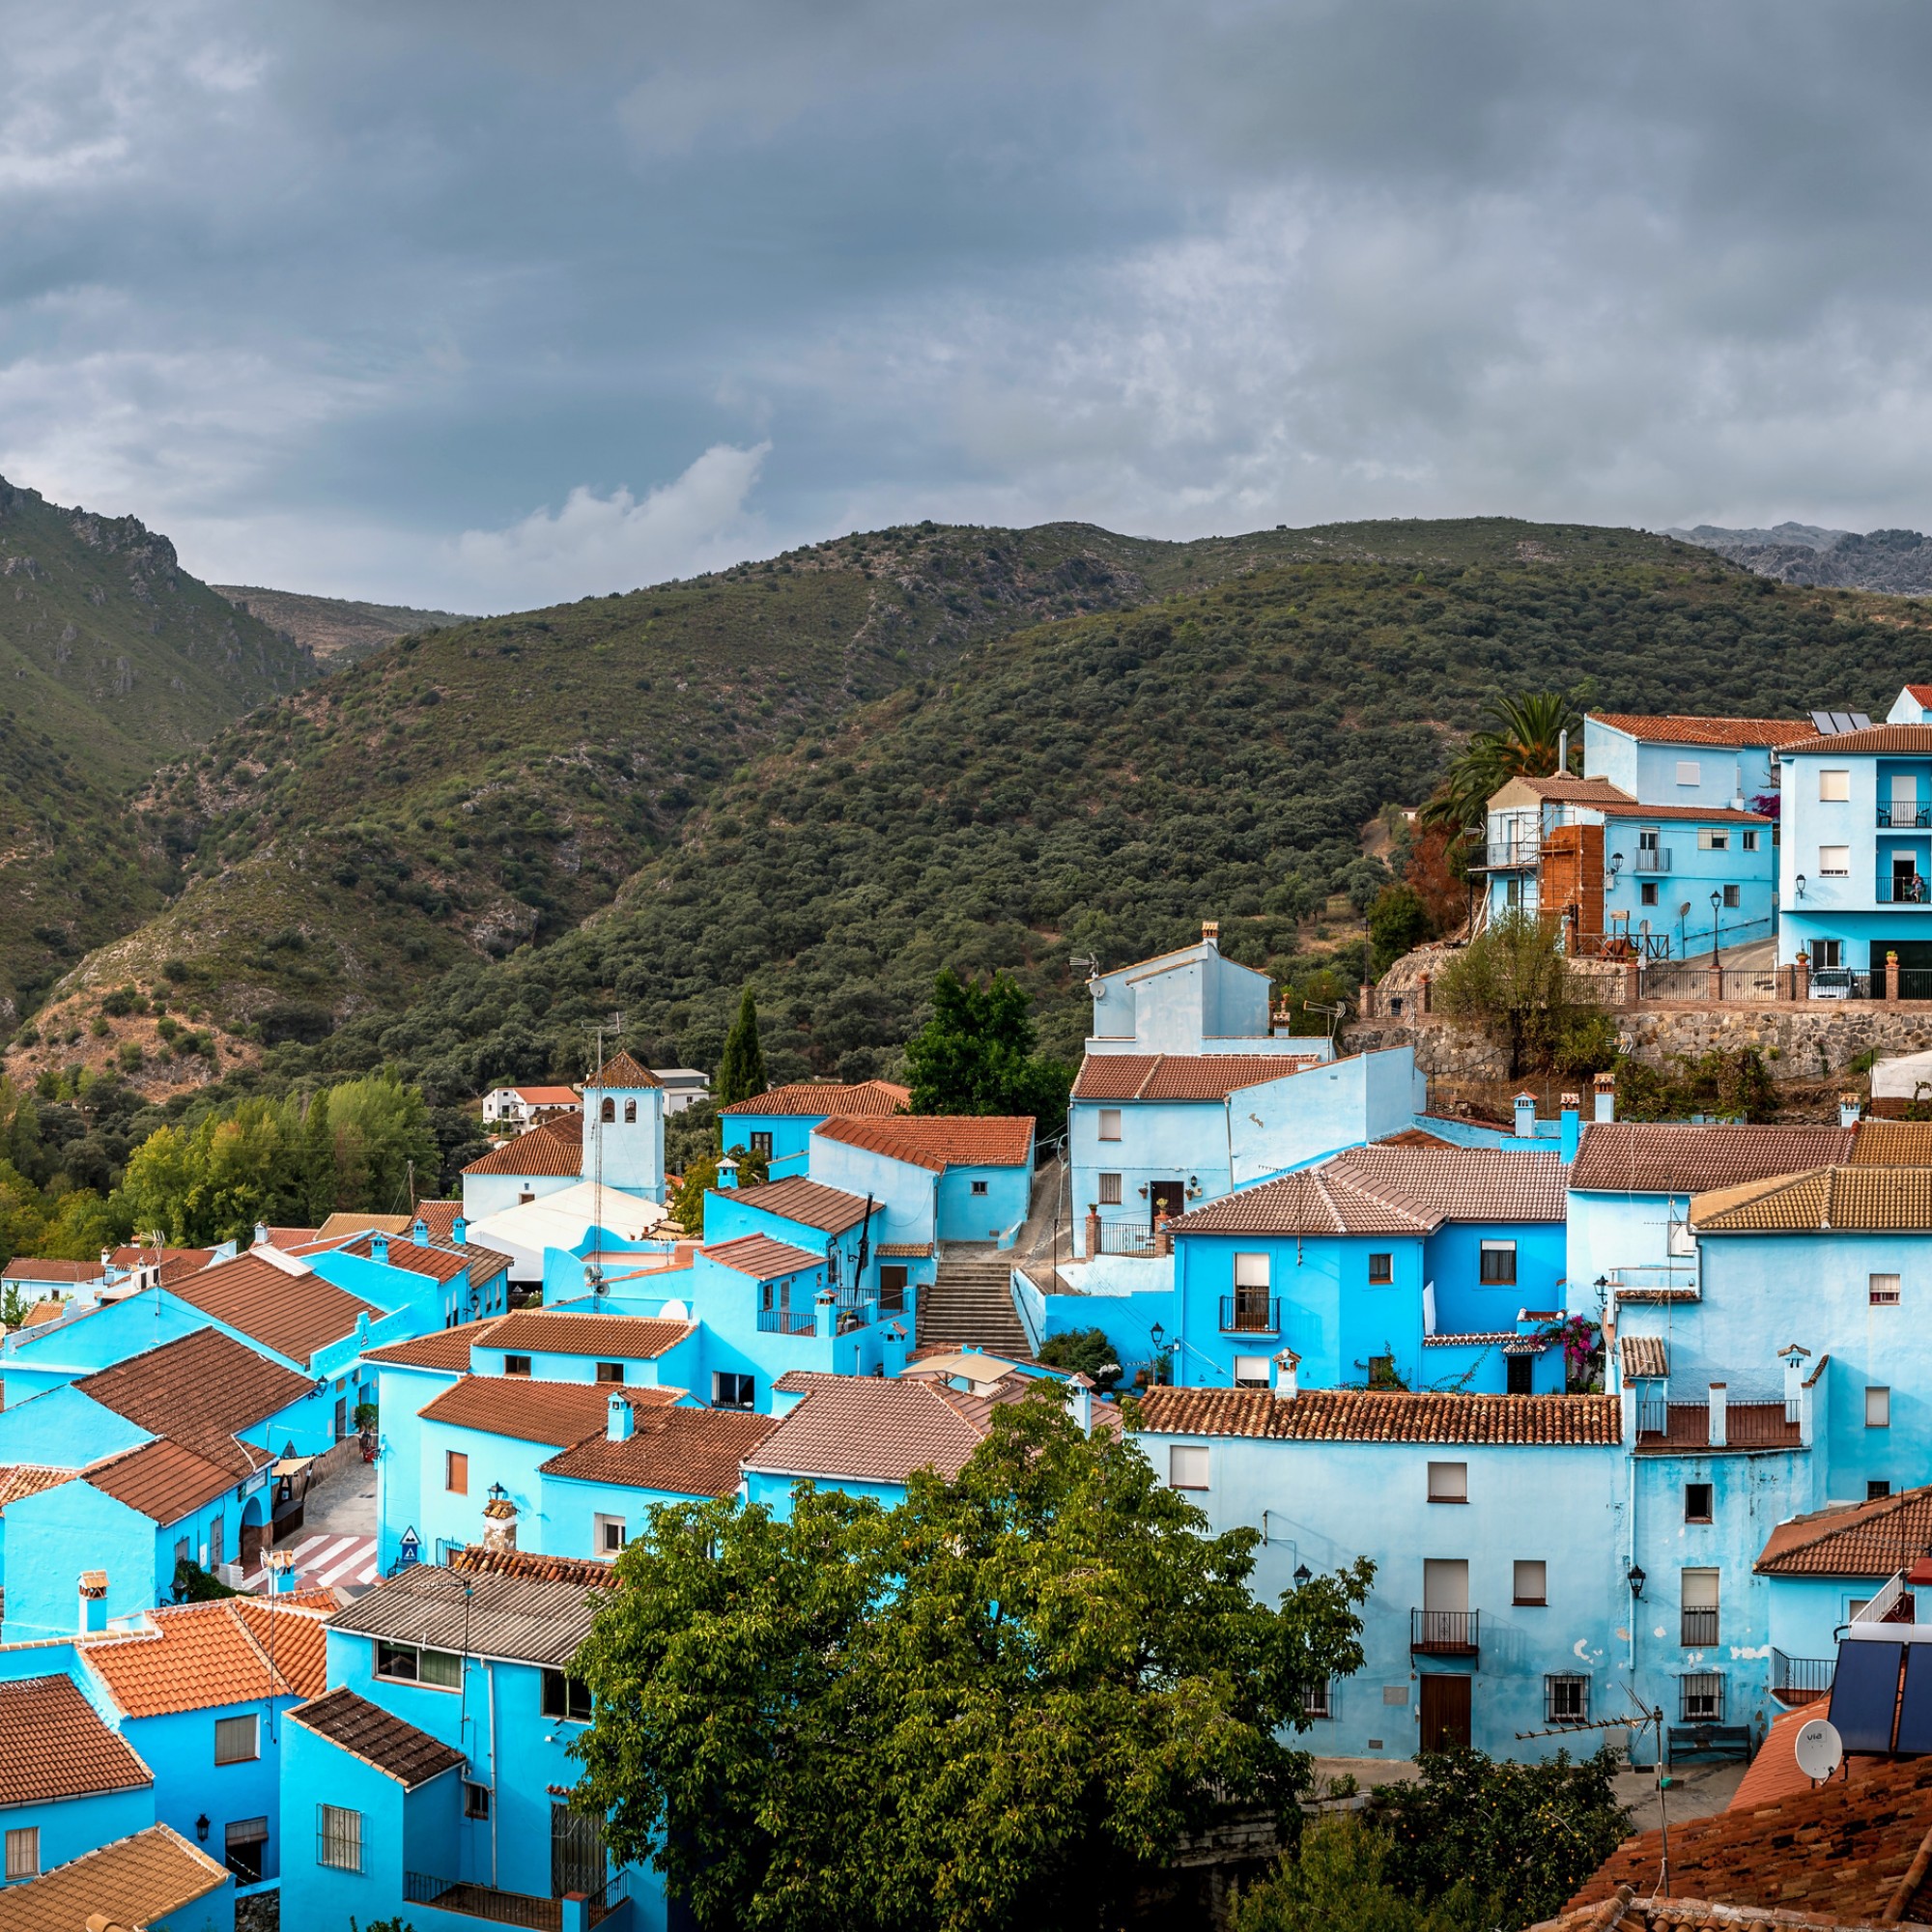 Das Dorf Júzcar in blau getüncht